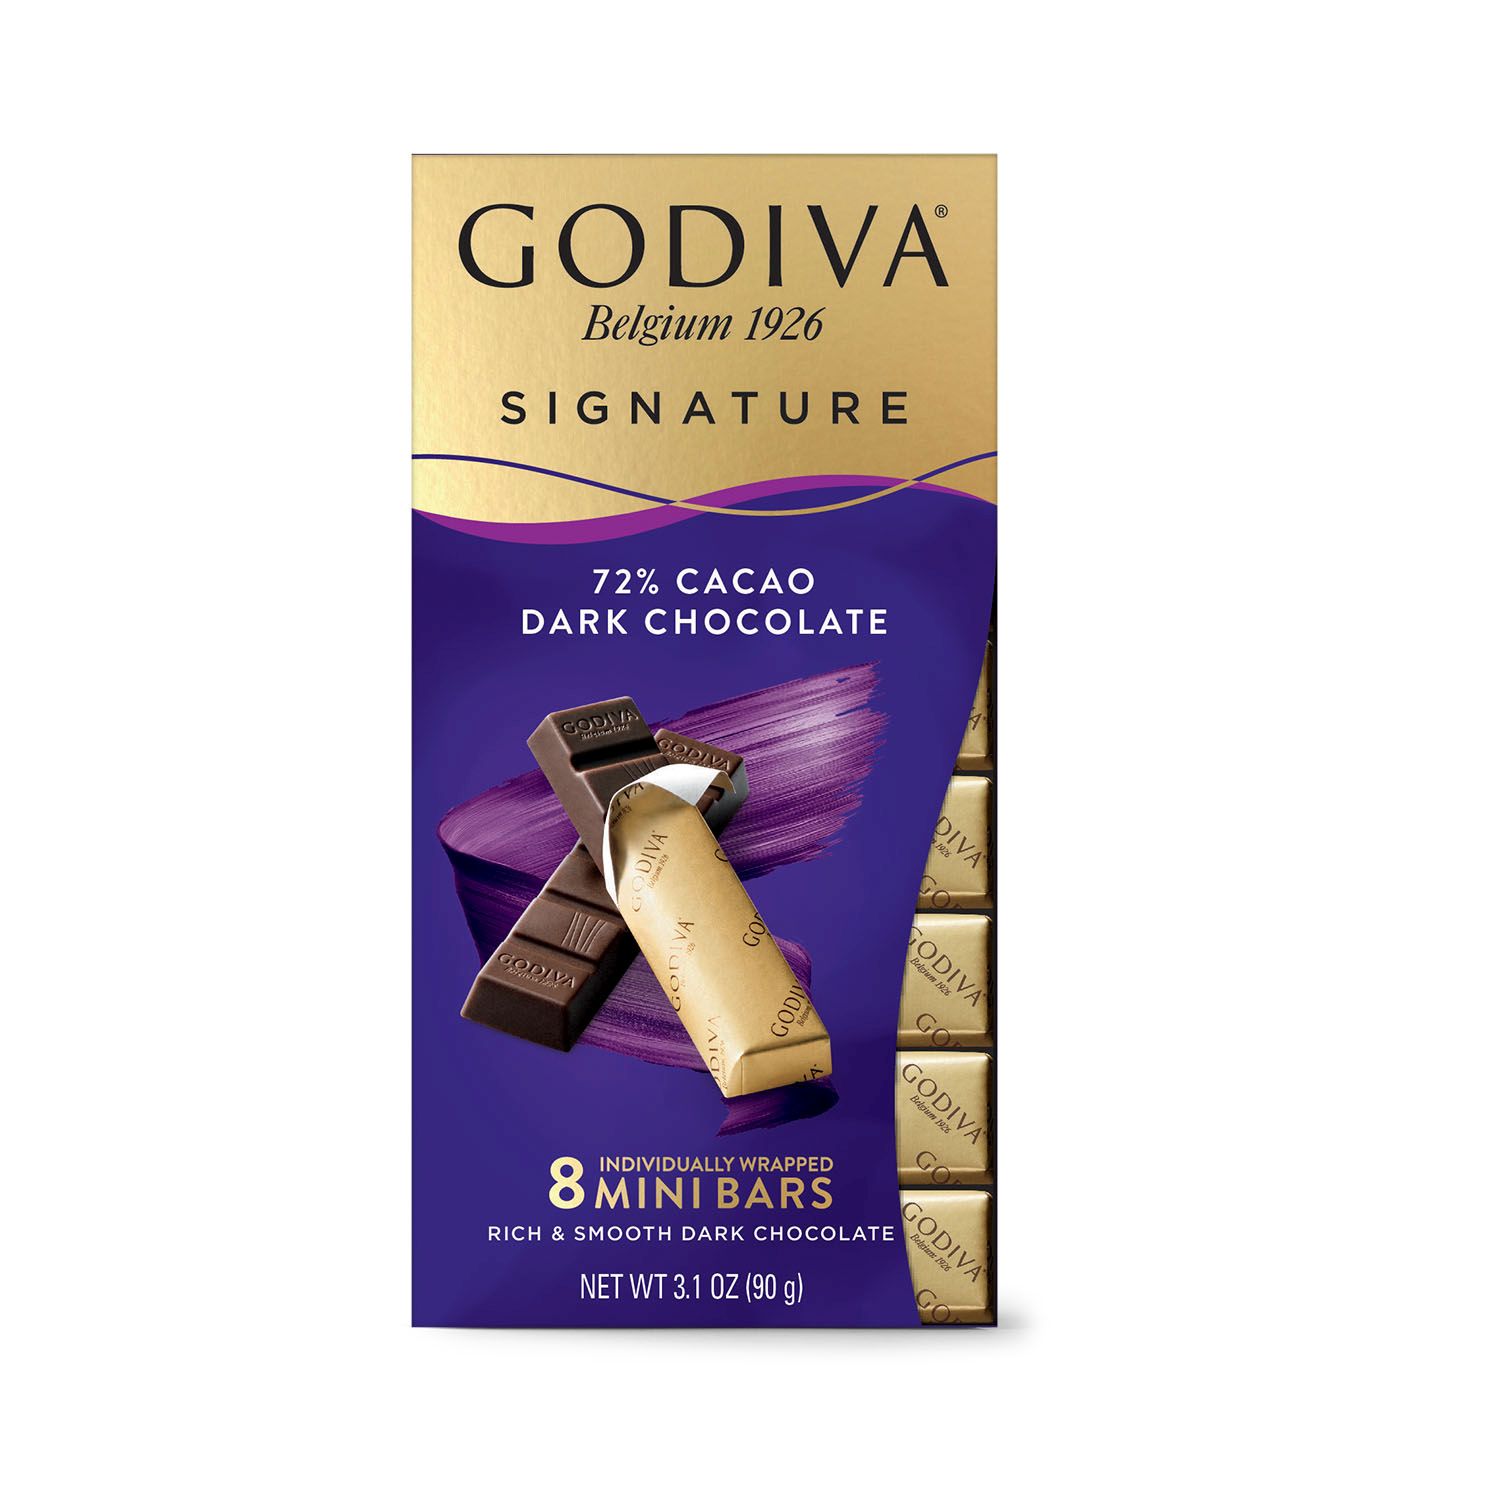 Godiva Signature Dark Chocolate, 8 Mini Bars, 3.1 oz - image 1 of 6